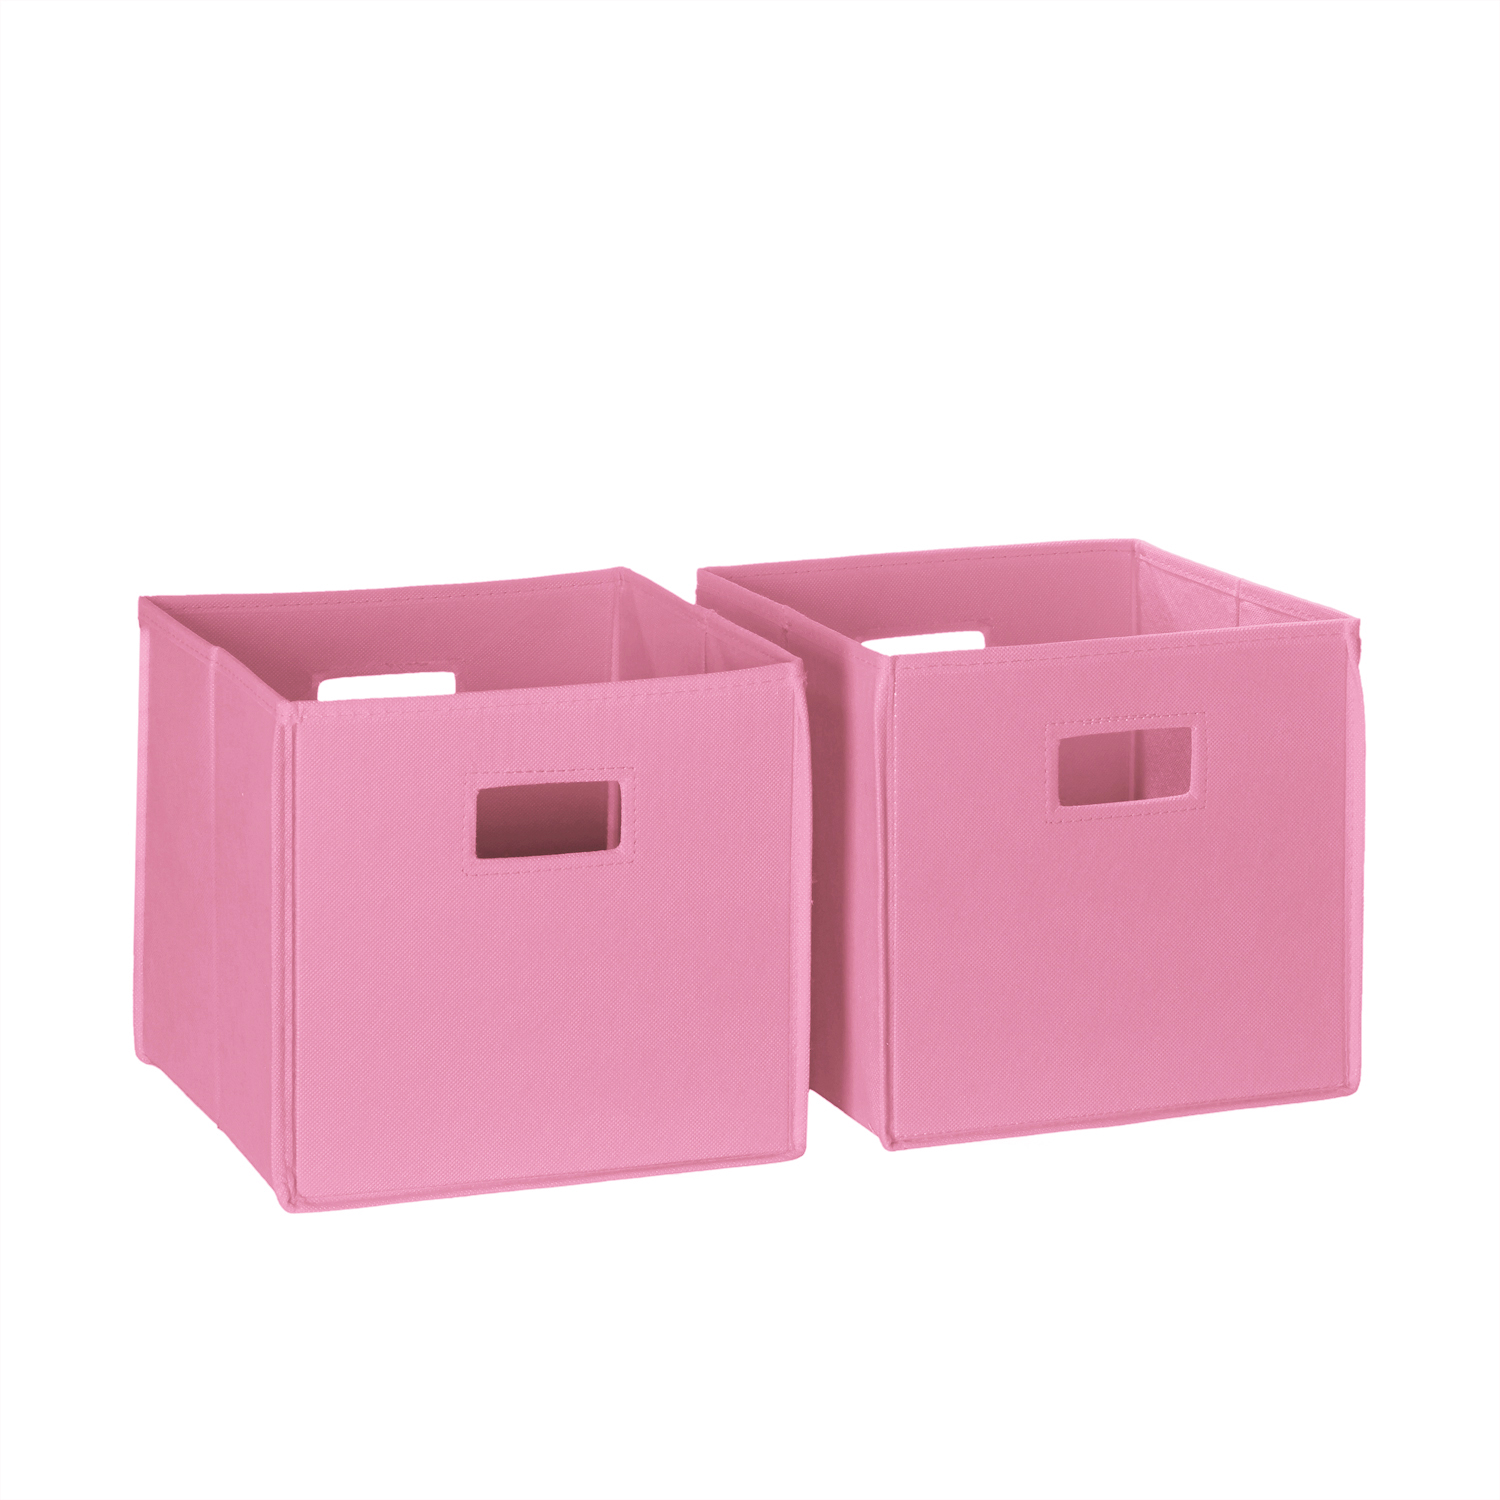 RiverRidge Home Folding Fabric Cube Storage Bin Set of 2 - Pink - image 1 of 7